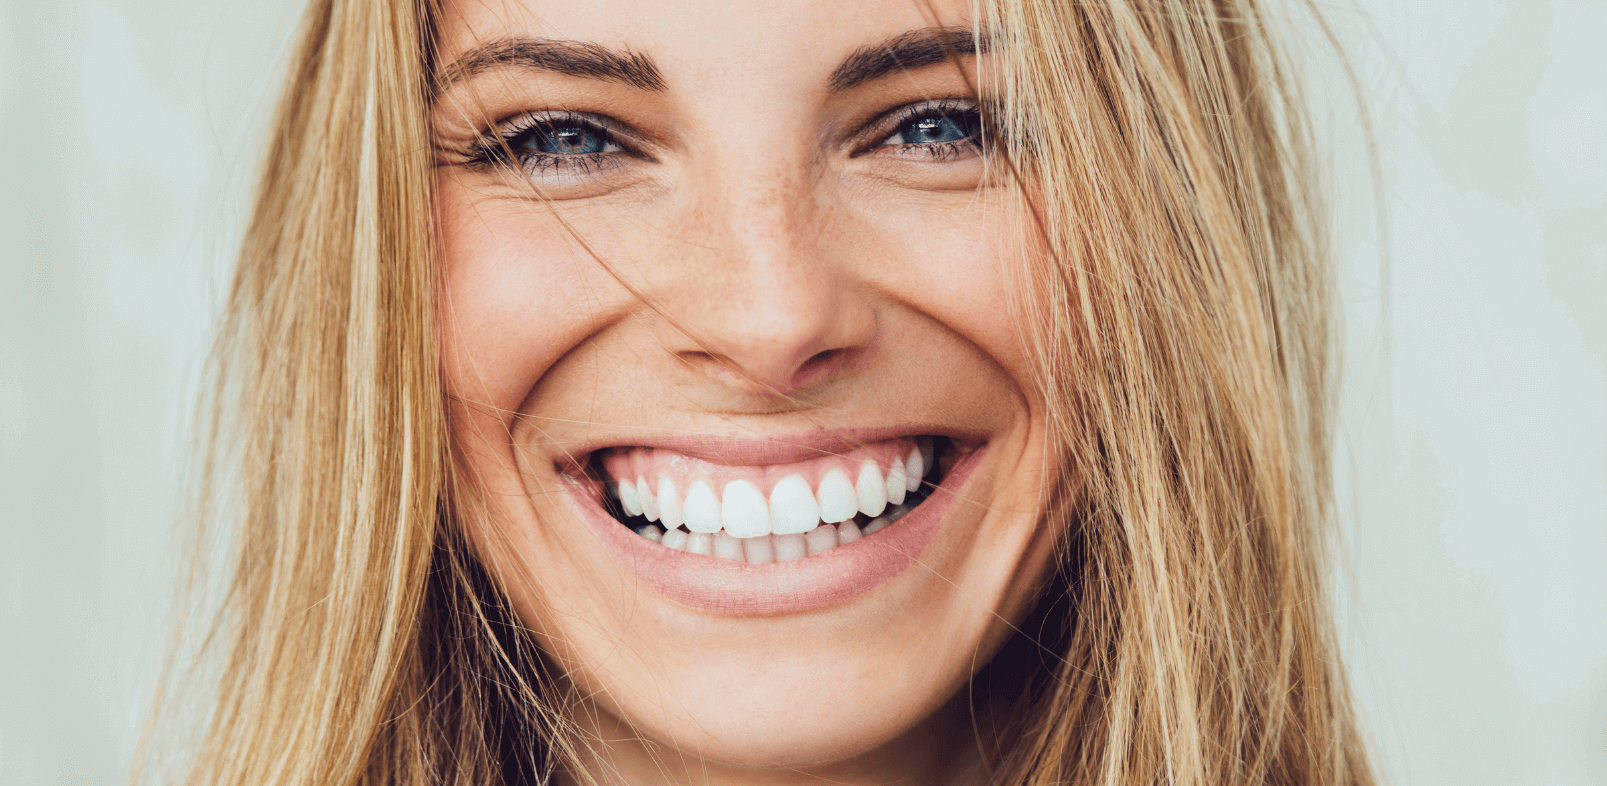 Woman with sensitive teeth smiling at Boroughbridge, Ripon